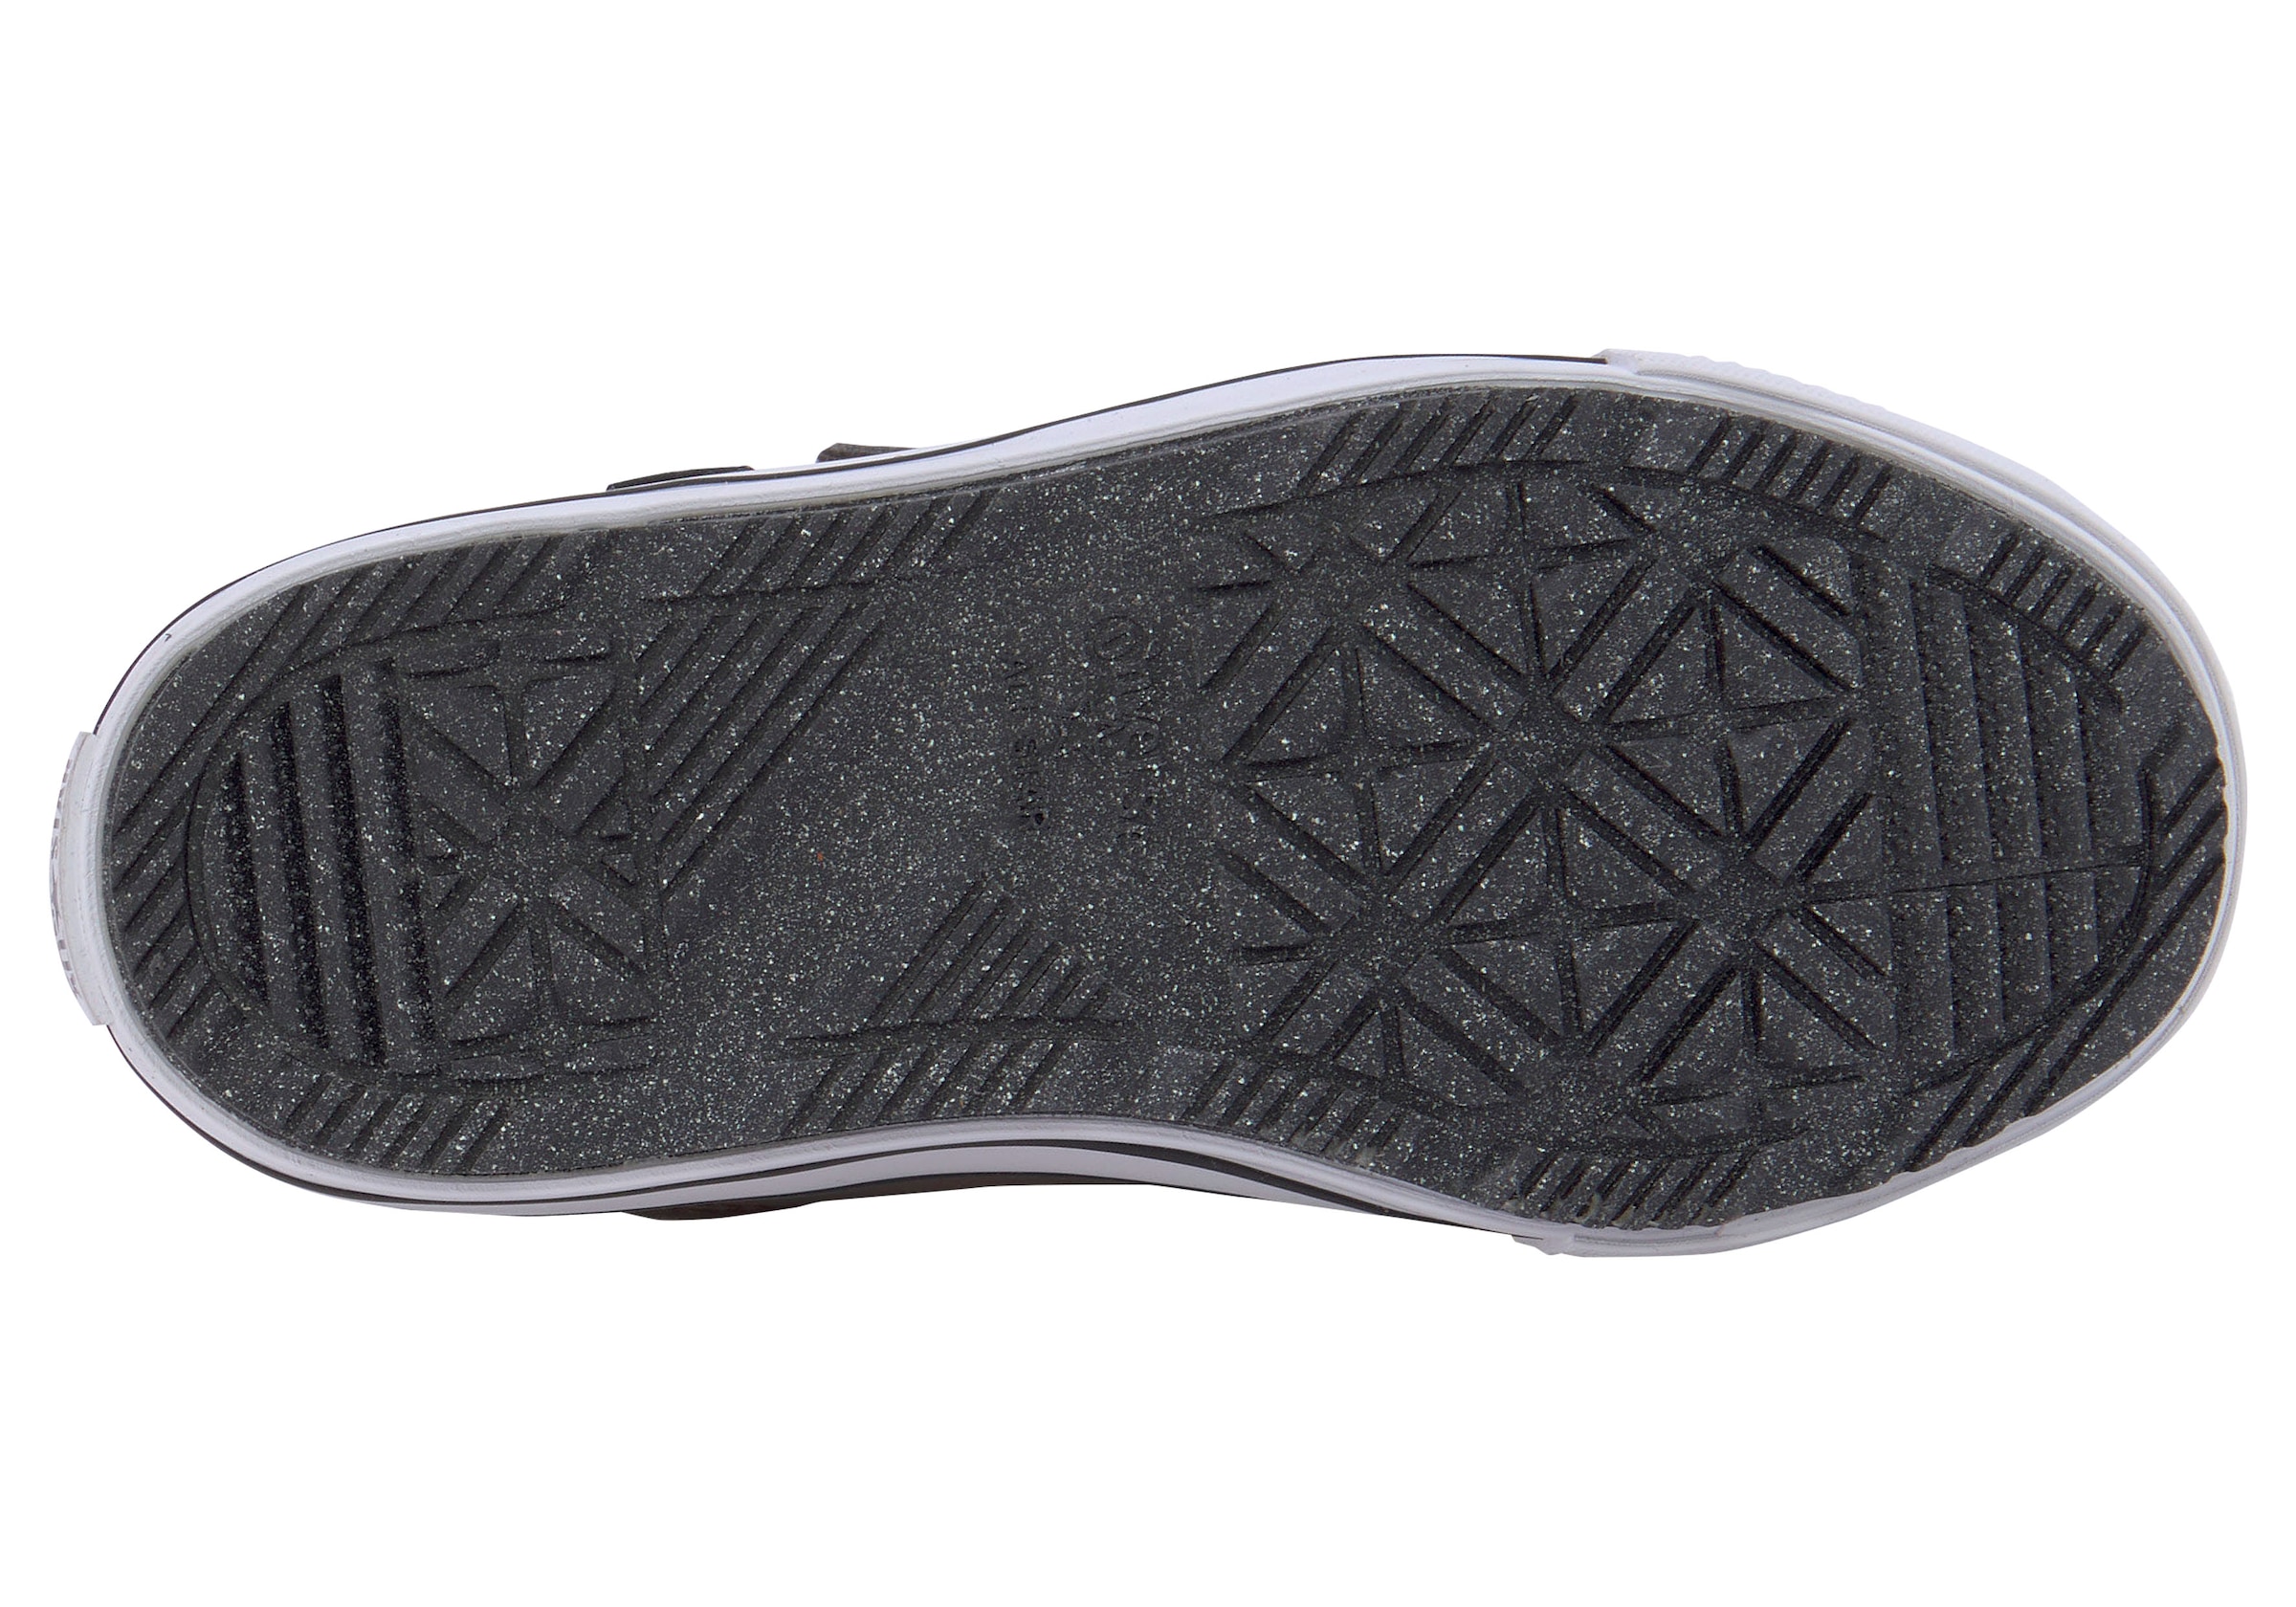 Converse Sneakerboots »CHUCK TAYLOR ALL STAR BERKSHIRE«, mit Klettverschluss